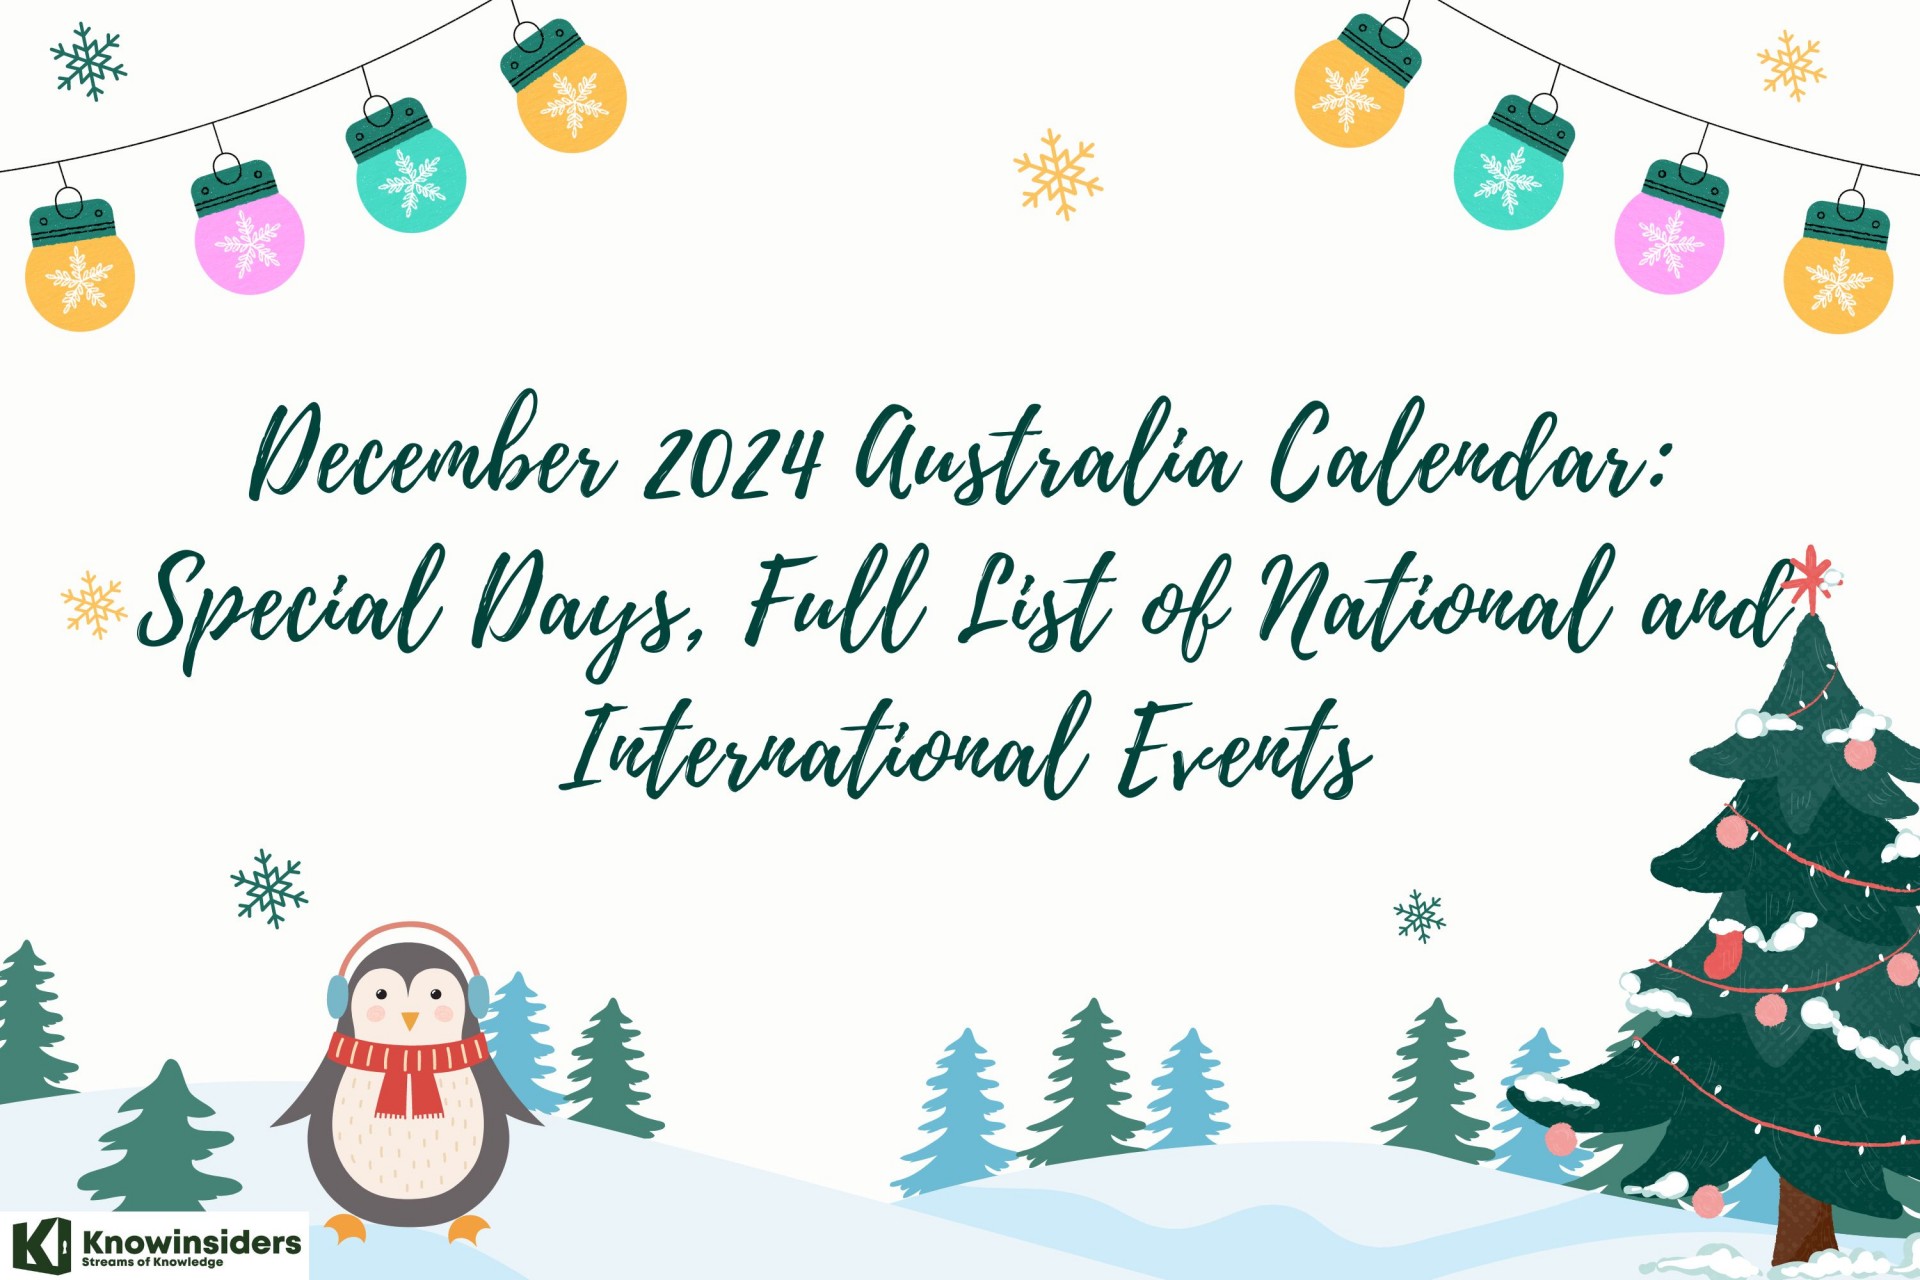 Australia Calendar December 2024: Special Days, Full List of National Holidays and International Events